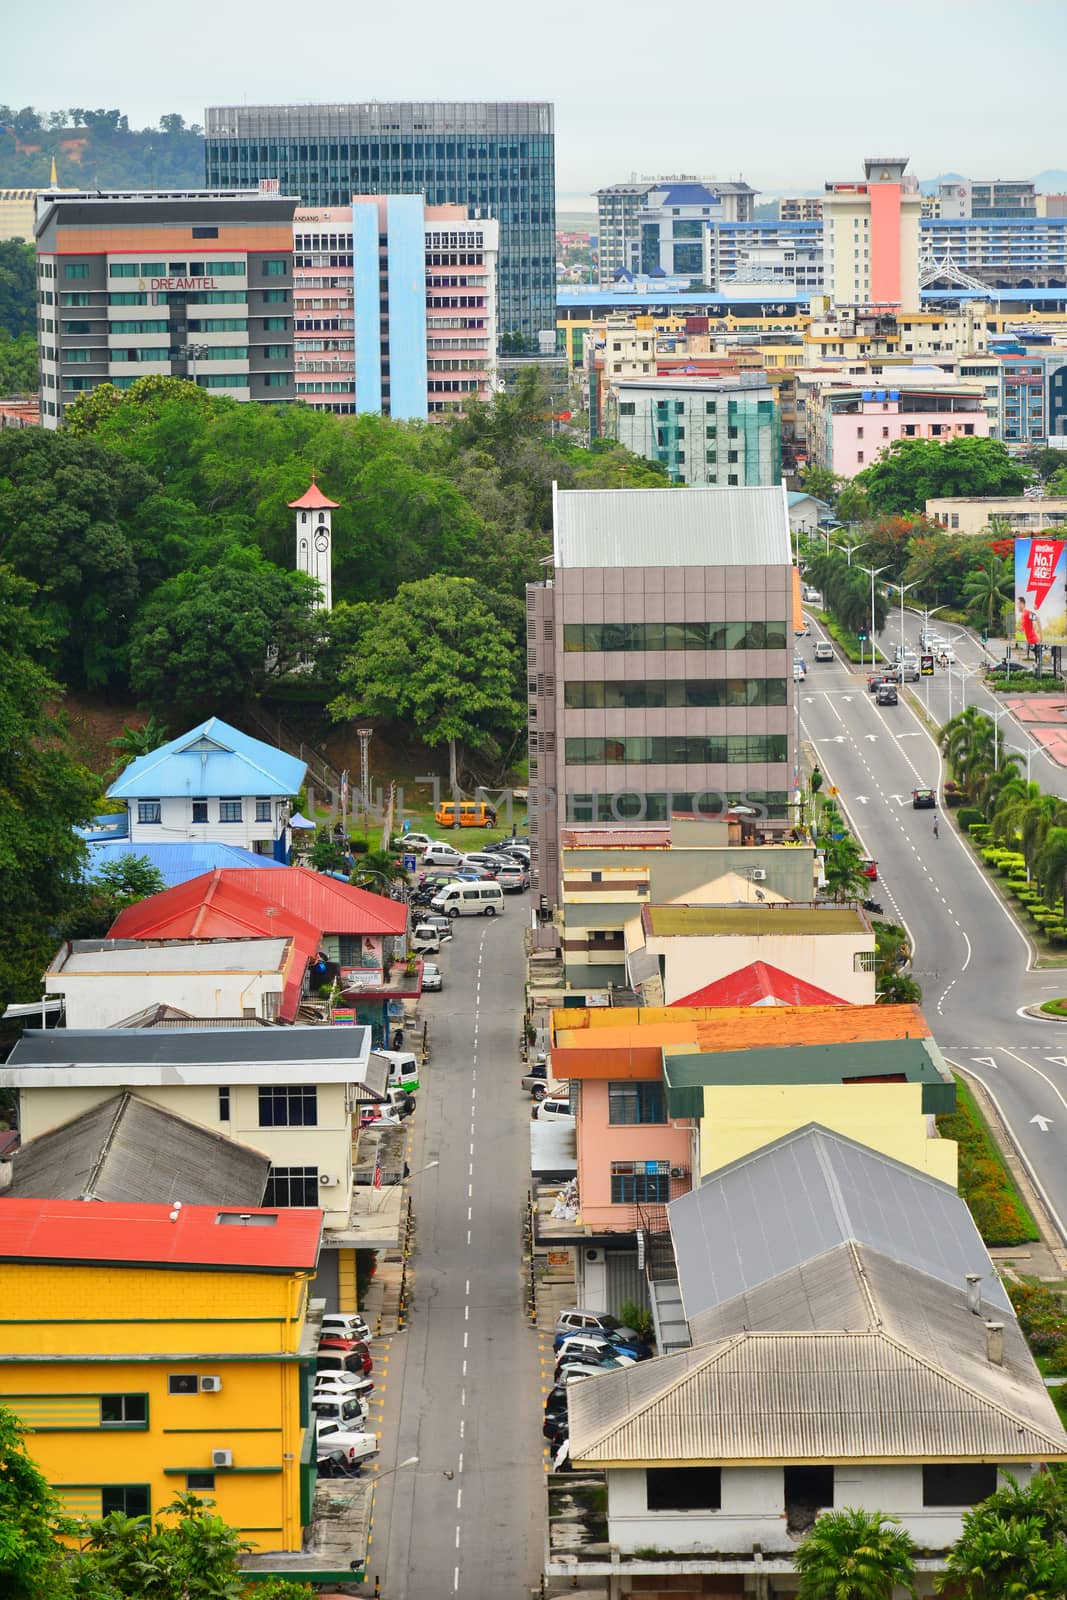 KOTA KINABALU, MY - JUNE 21: Kota Kinabalu City overview on June 21, 2016 in Kota Kinabalu, Malaysia. Kota Kinabalu, formerly known as Jesselton, is the capital of the state of Sabah, Malaysia.